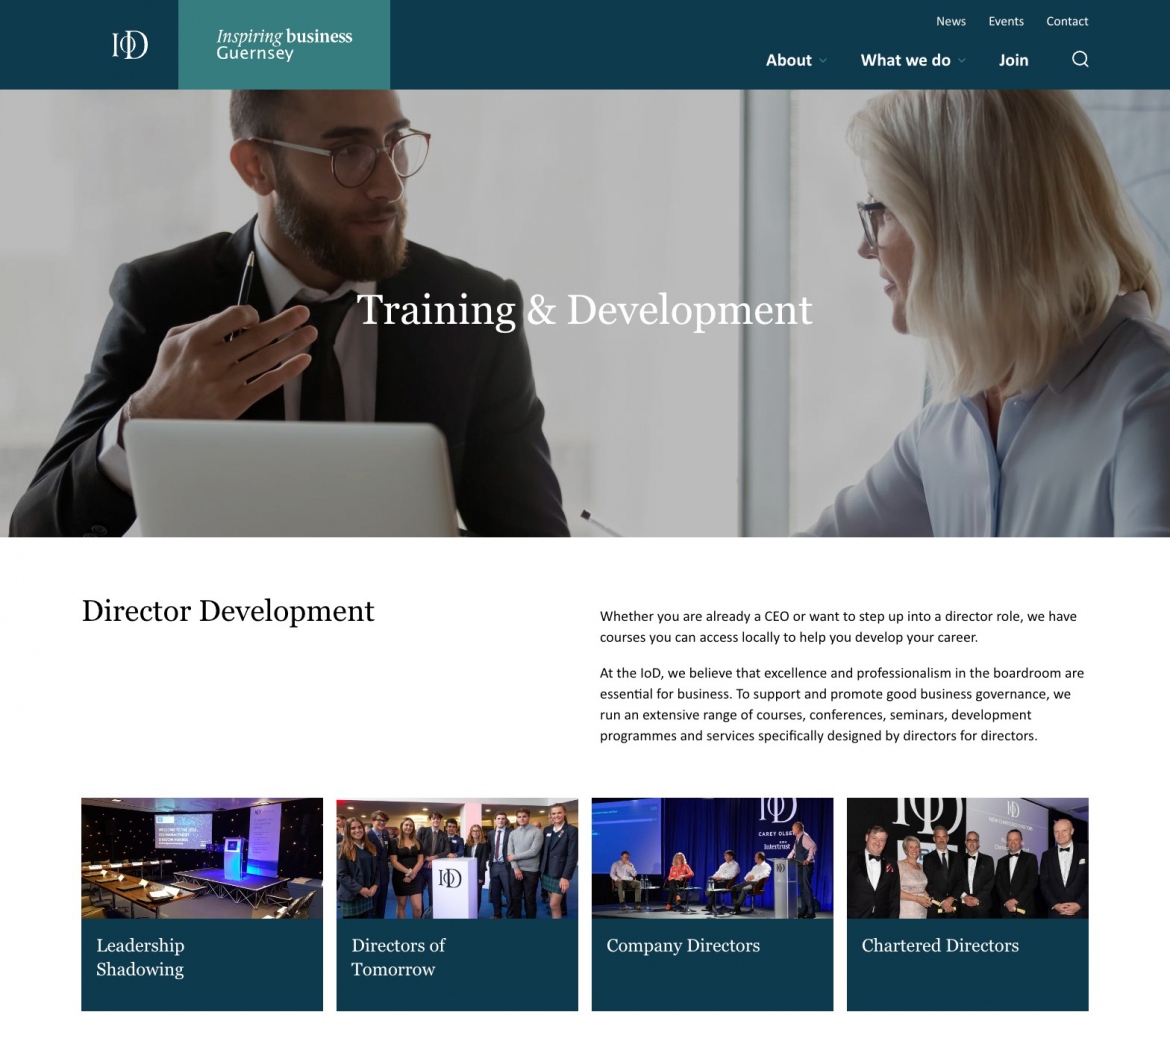 IoD Guernsey website training & development section